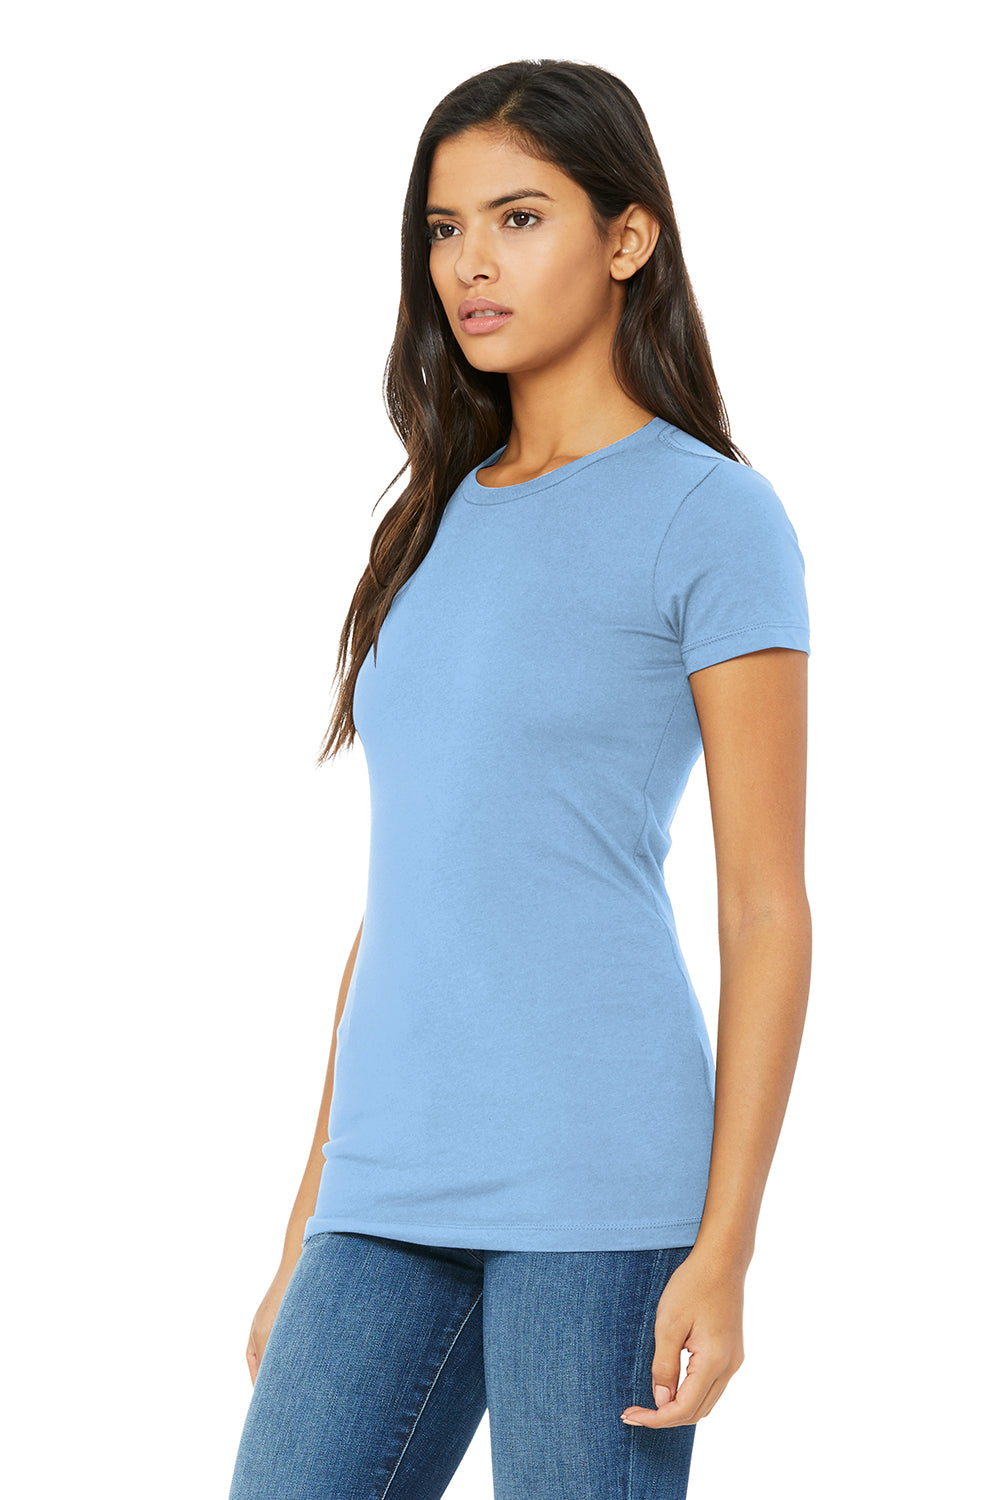 Bella + Canvas BC6004/6004 Womens The Favorite Short Sleeve Crewneck T-Shirt Baby Blue Model 3Q